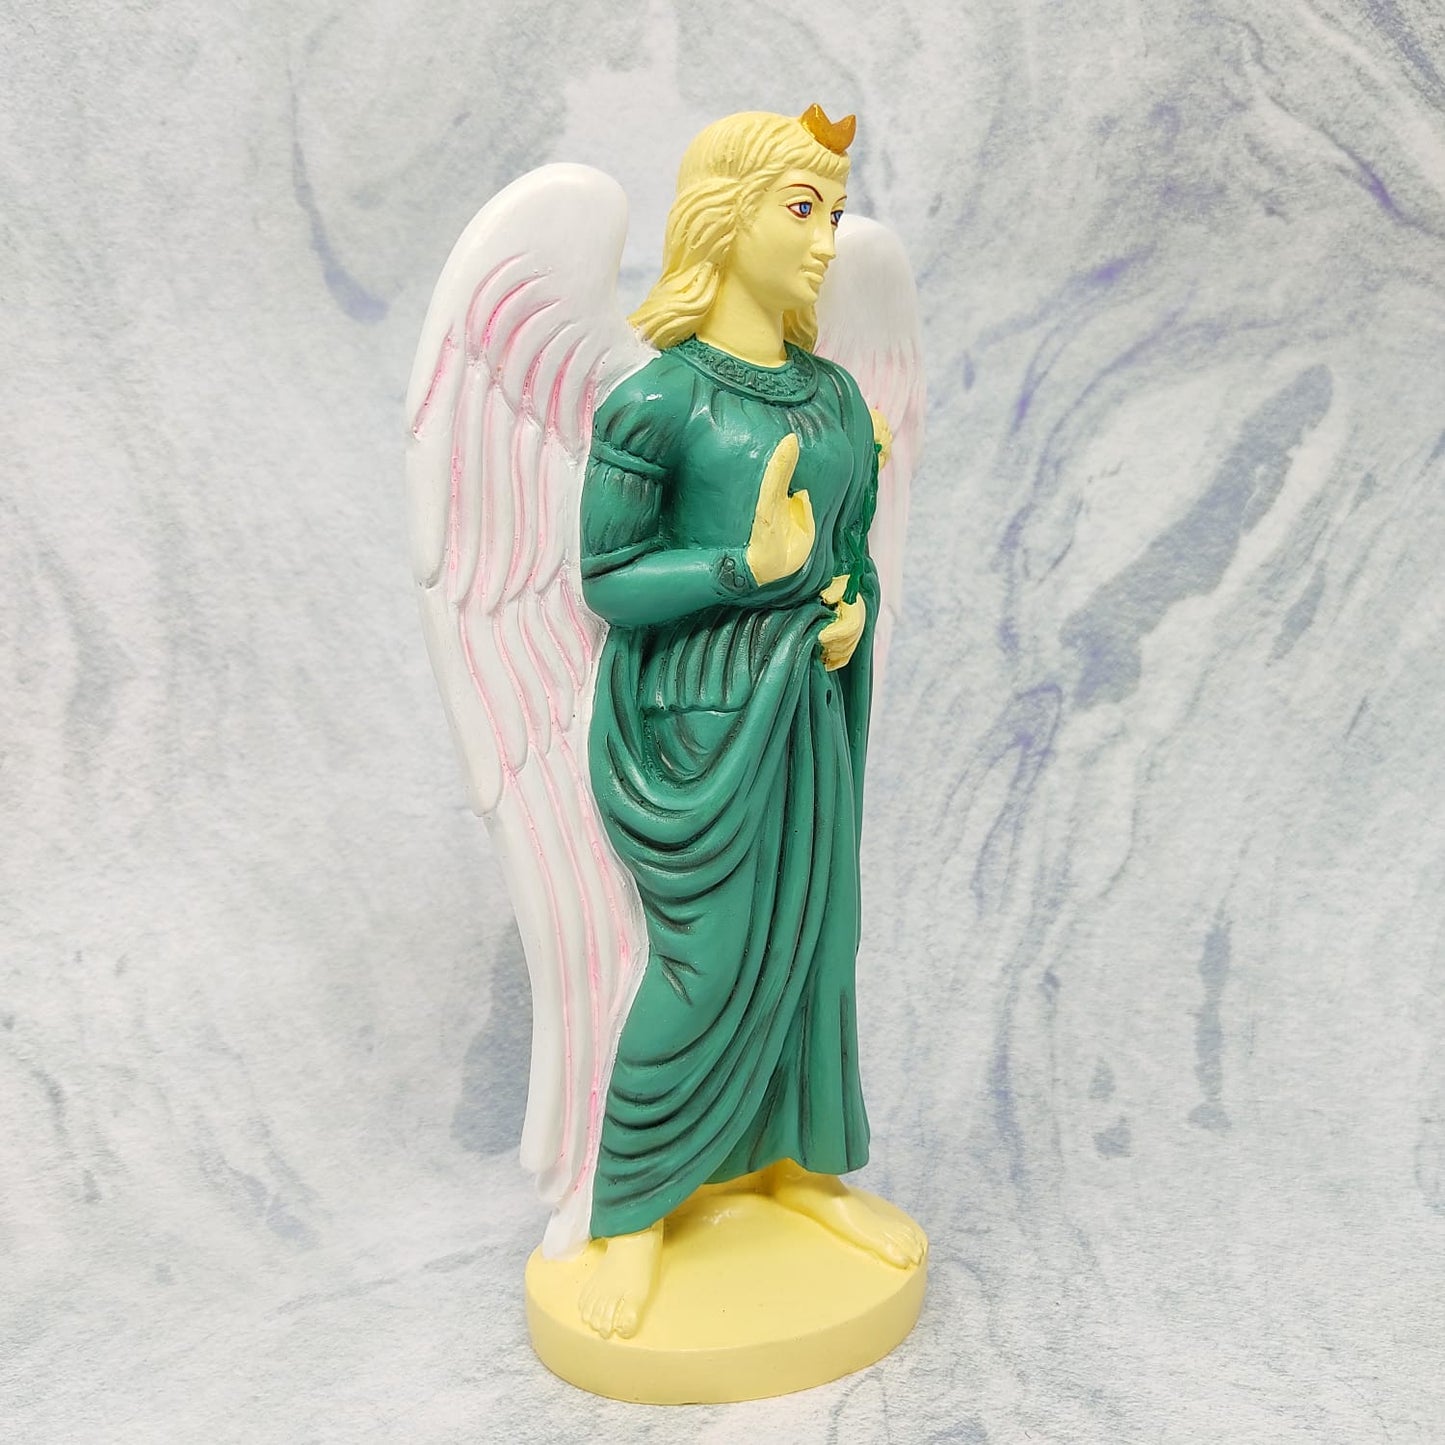 Archangel Gabriel Statue Catholic Handmade Saint Messenger of God Figurine 8.25"